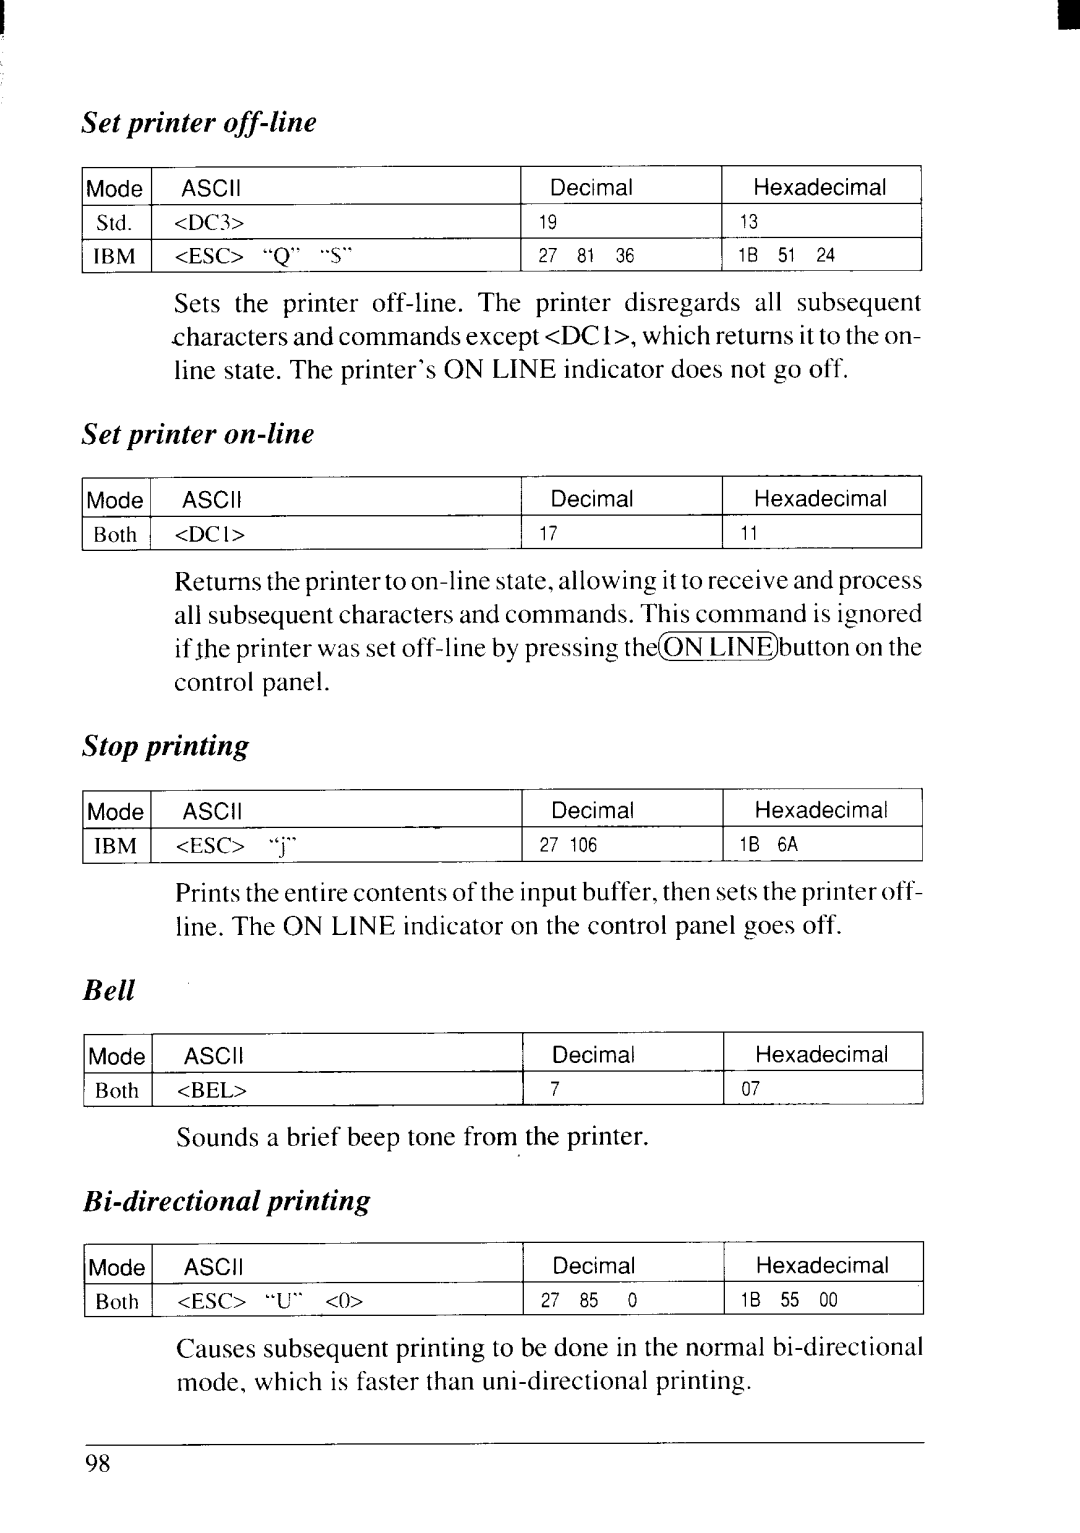 Star Micronics NX-2415II Set printer off-line, Set printer on-line, Stop printing, Bell, Bi-directional printing 